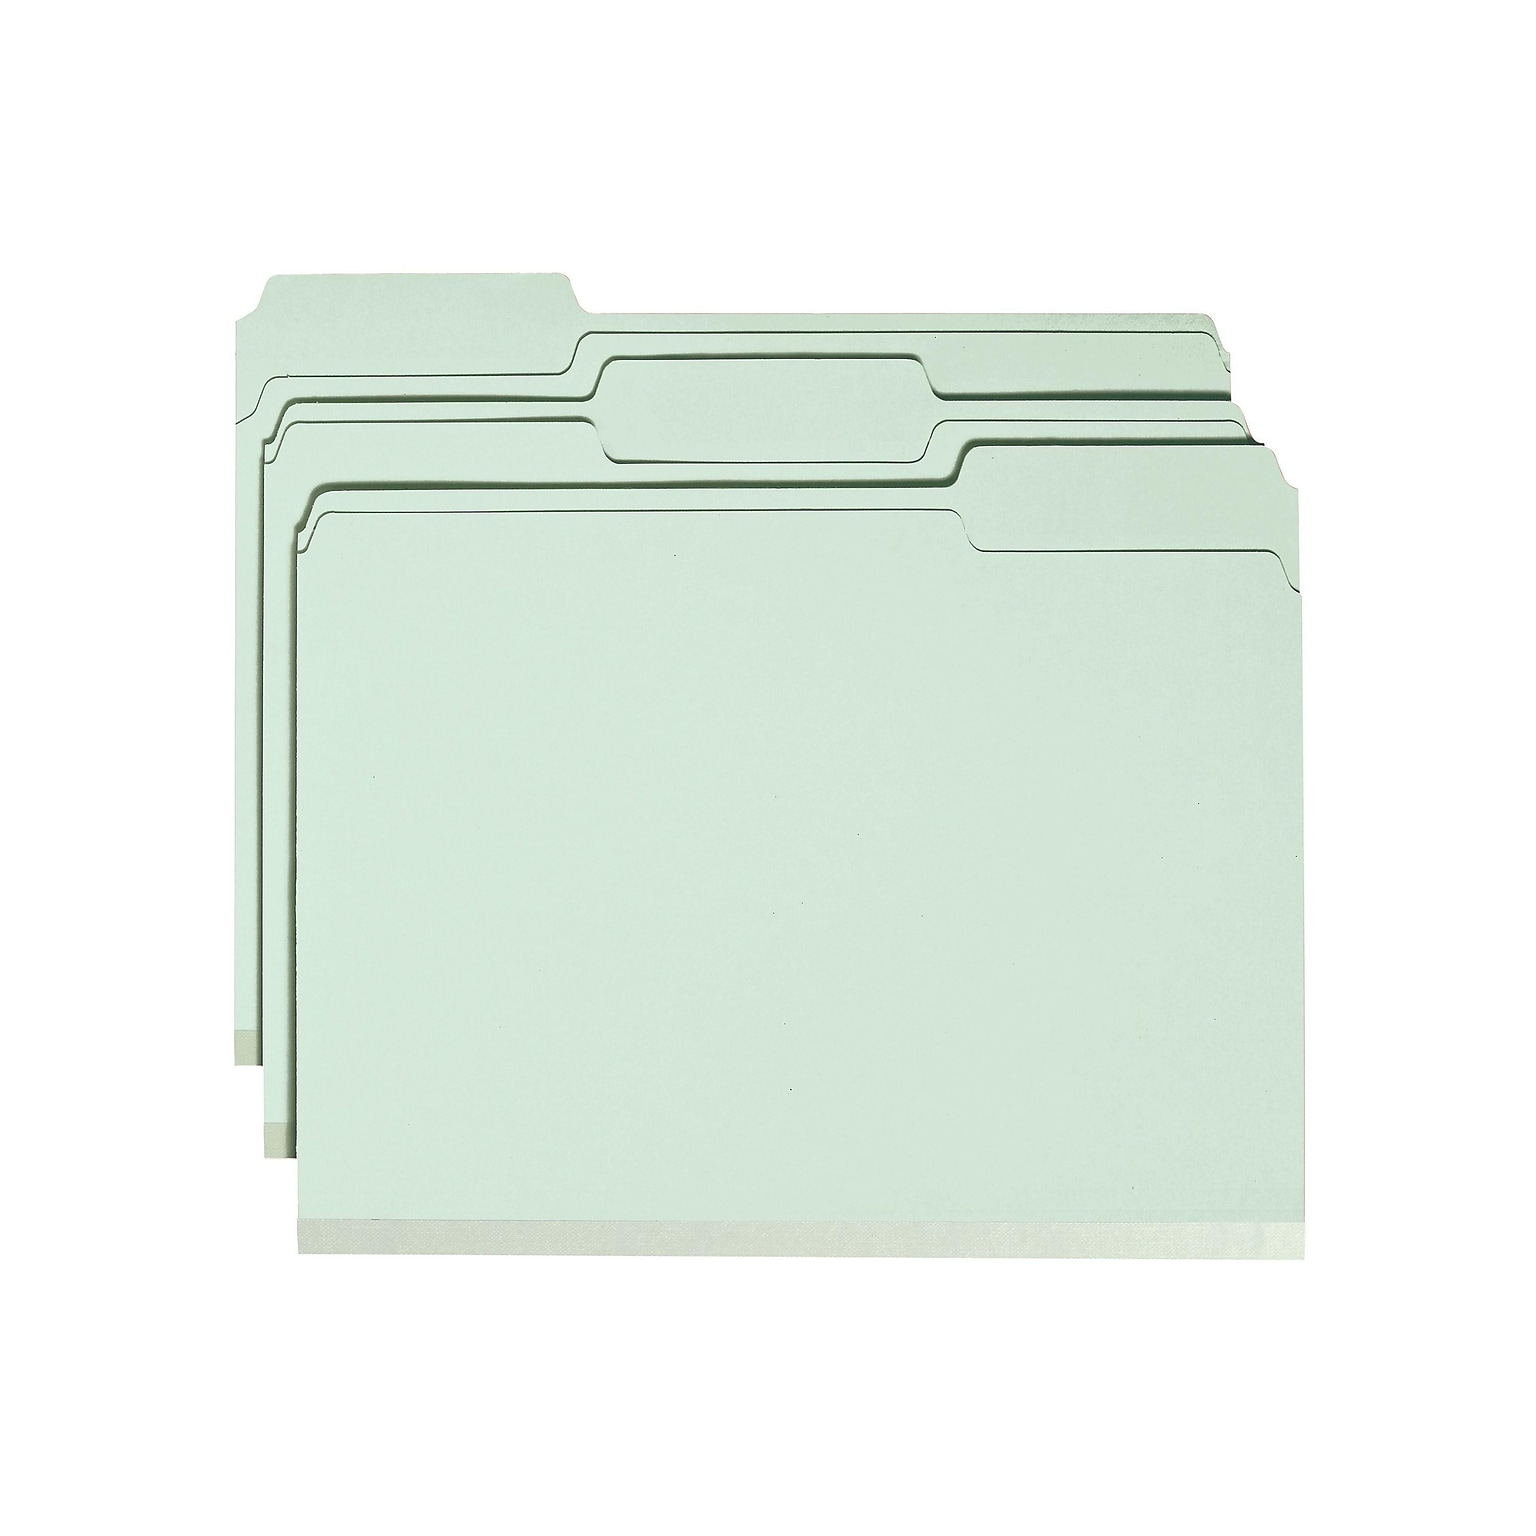 Smead Pressboard Classification Folders with SafeSHIELD Fasteners, 1/3-Cut Tab, Letter Size, Gray/Green, 25/Box (14931)